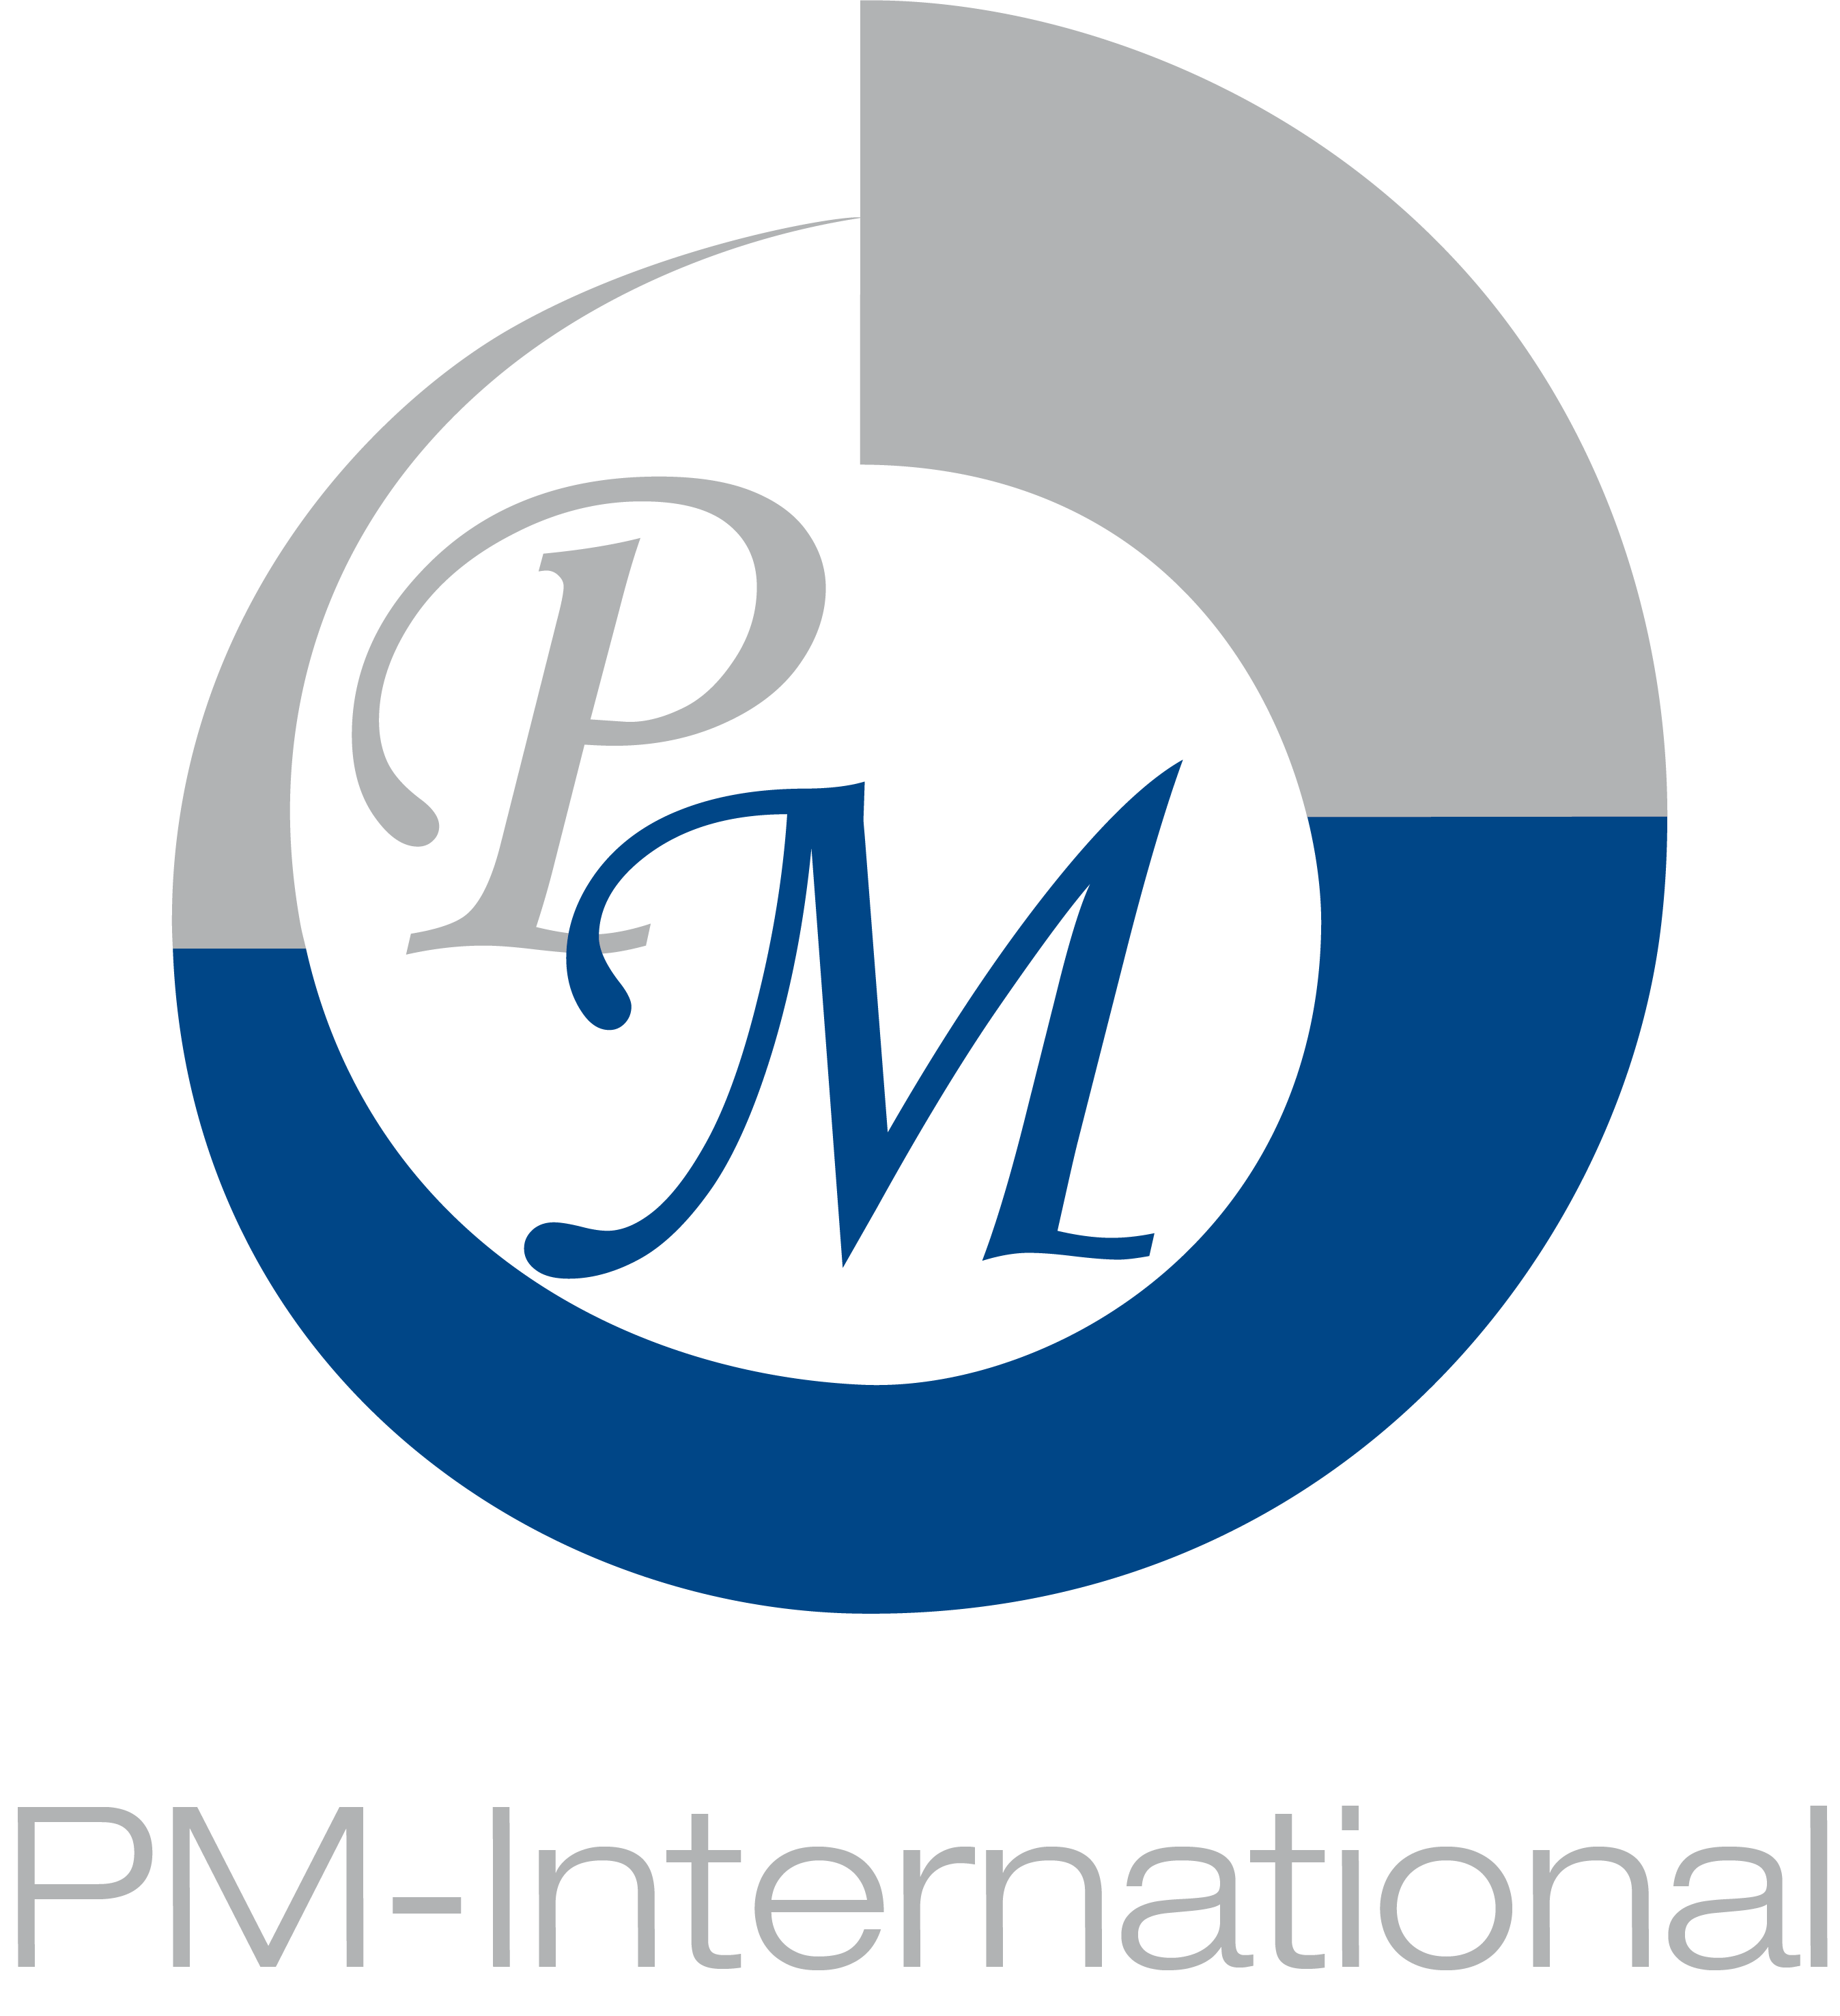 pm-international4c